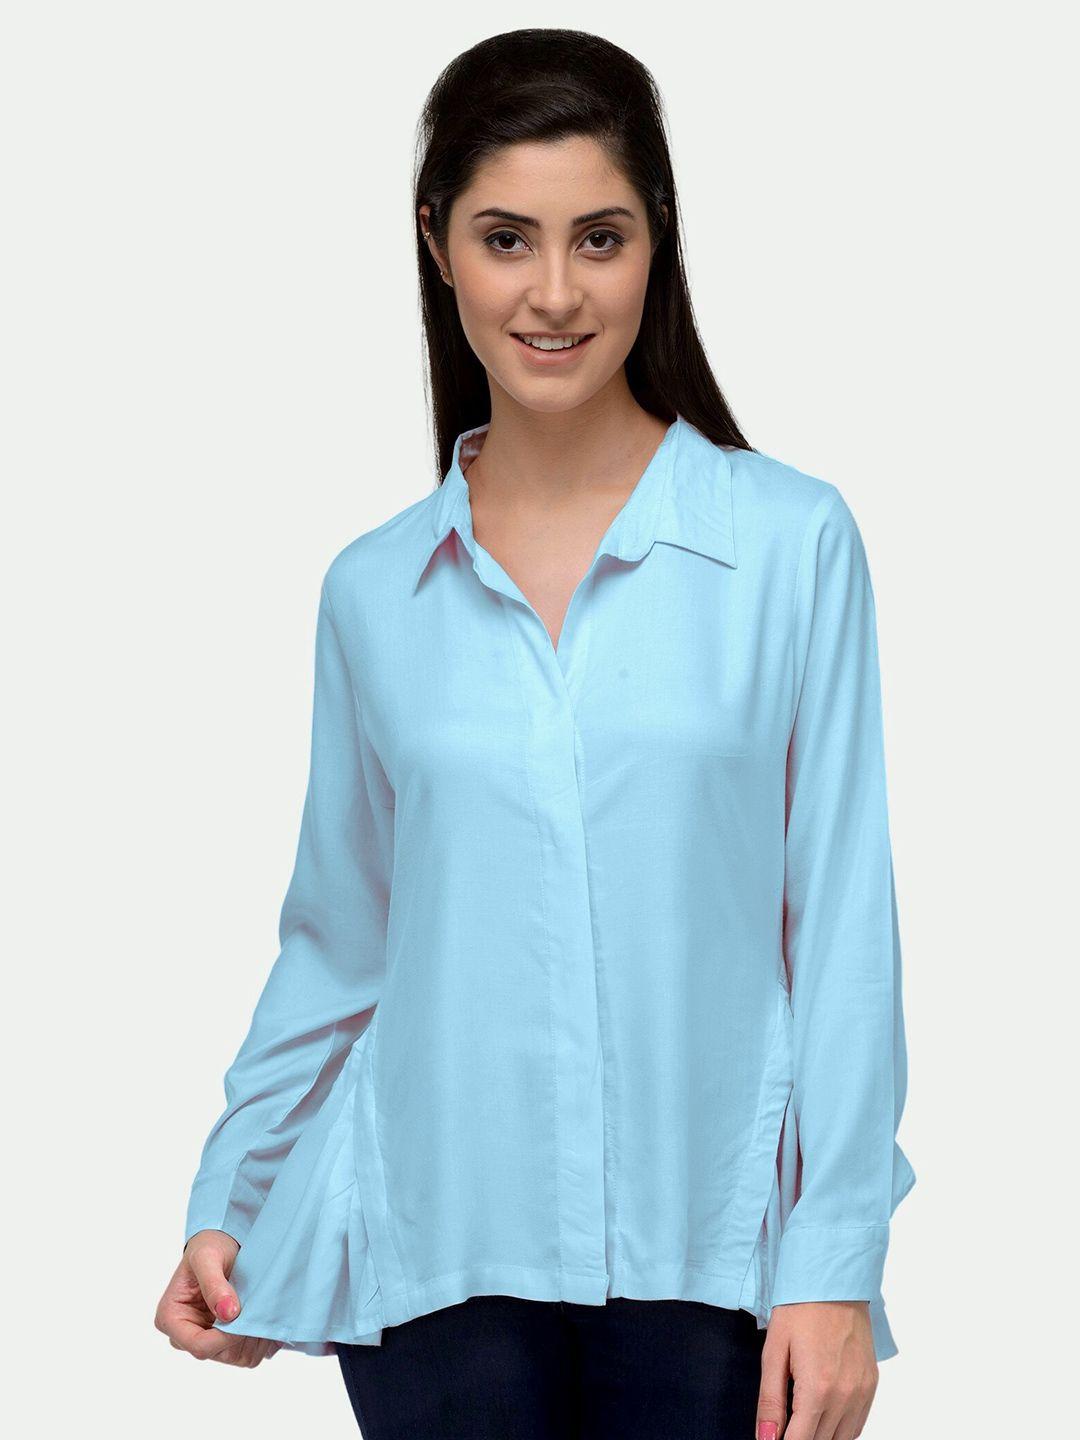 patrorna women blue comfort solid casual shirt